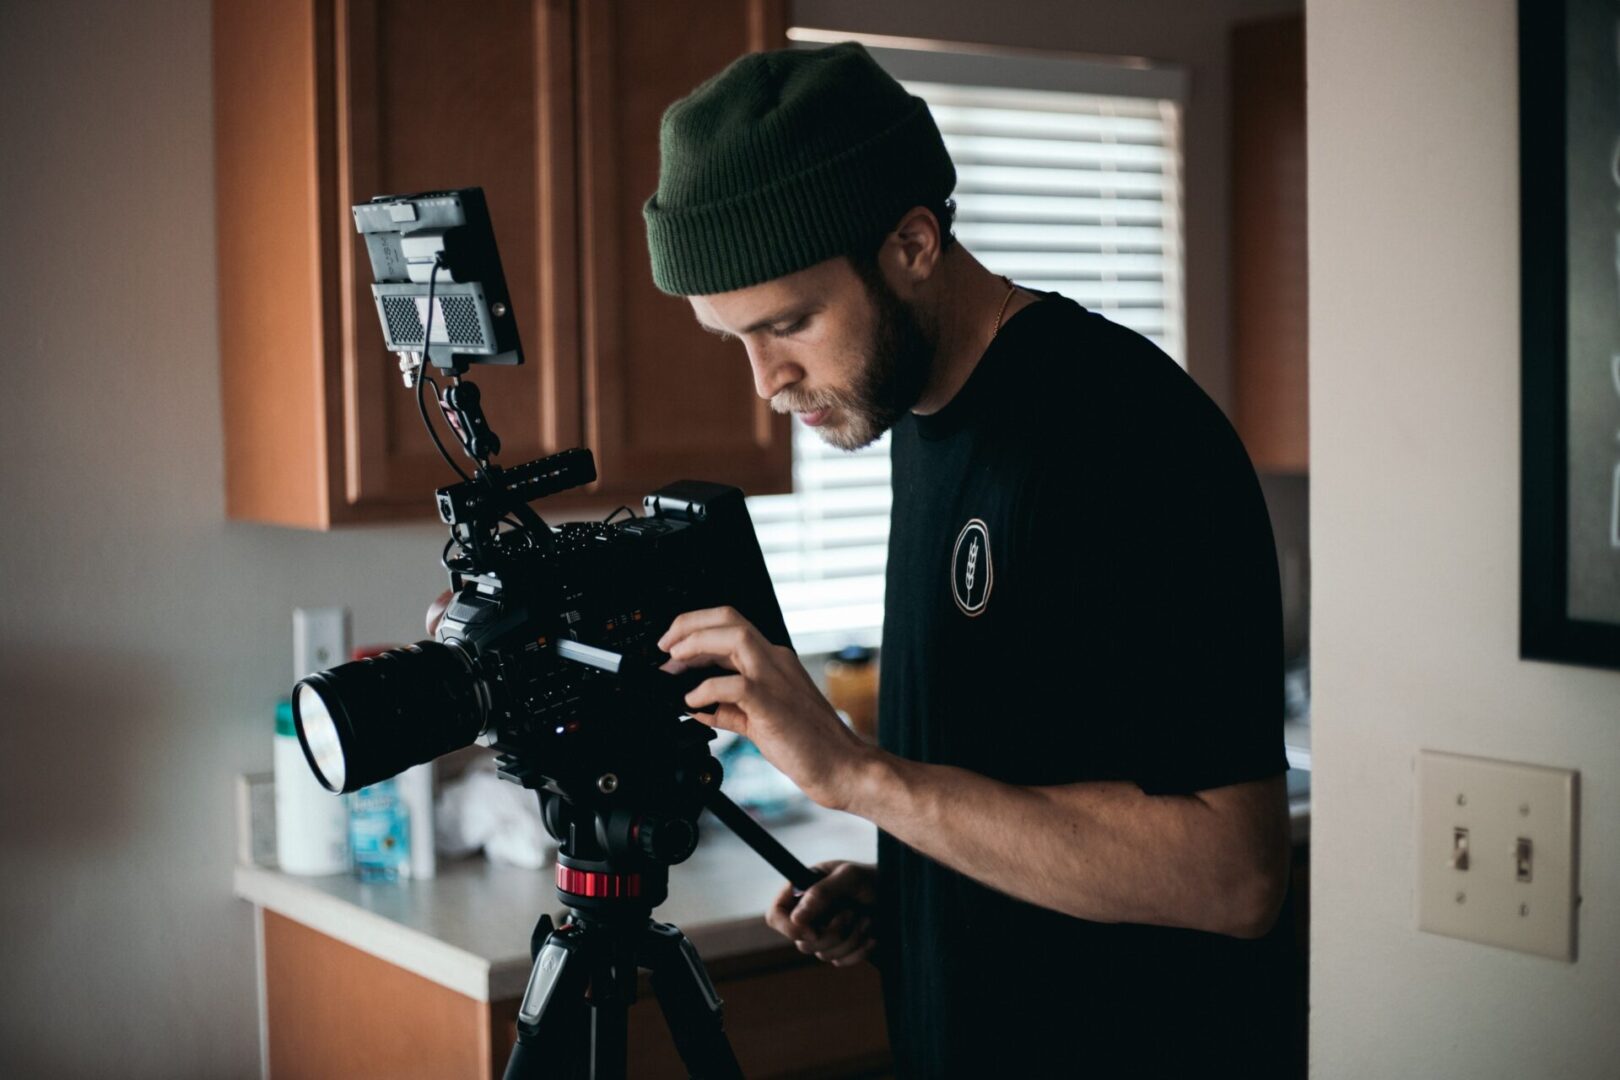 Professional videographer holding professional camera